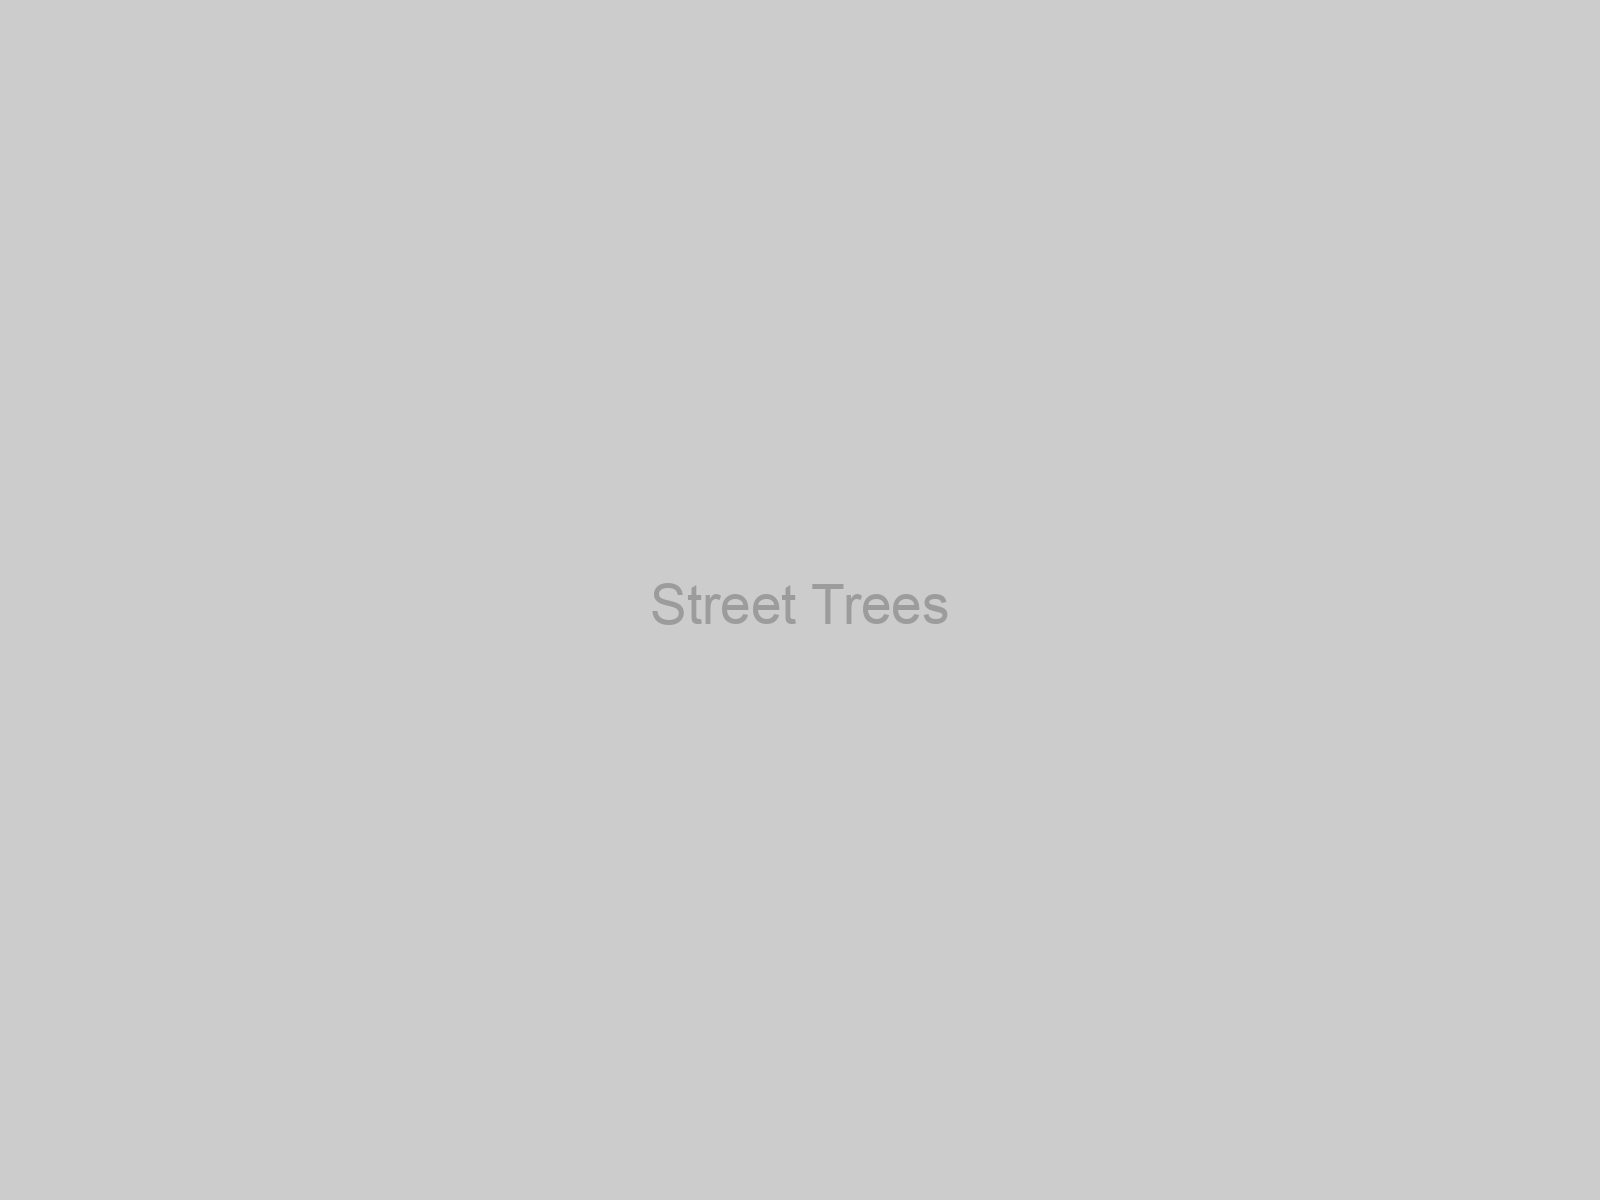 Street Trees